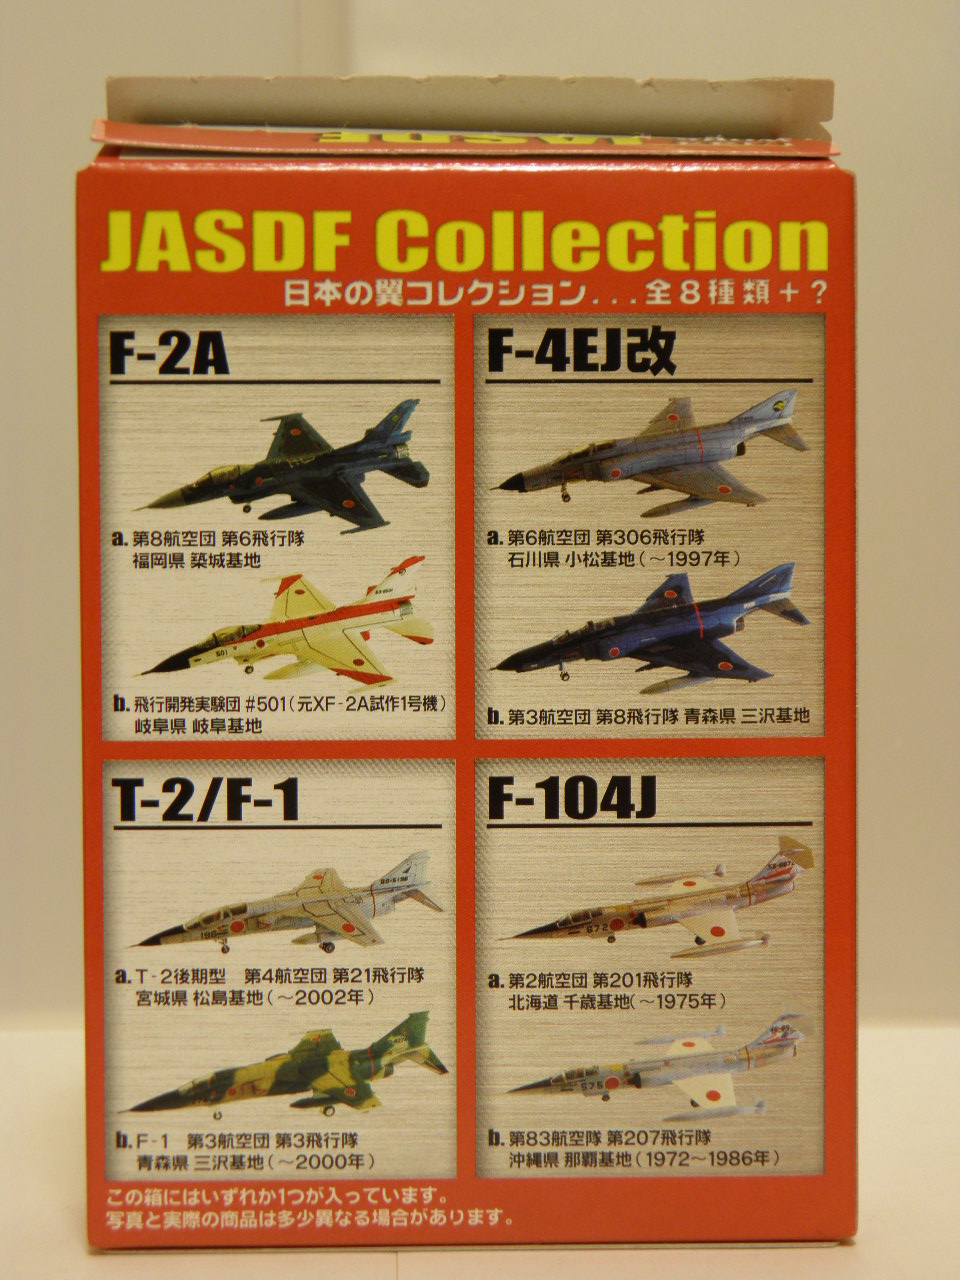 MITAKENの部屋 日本の翼コレクション